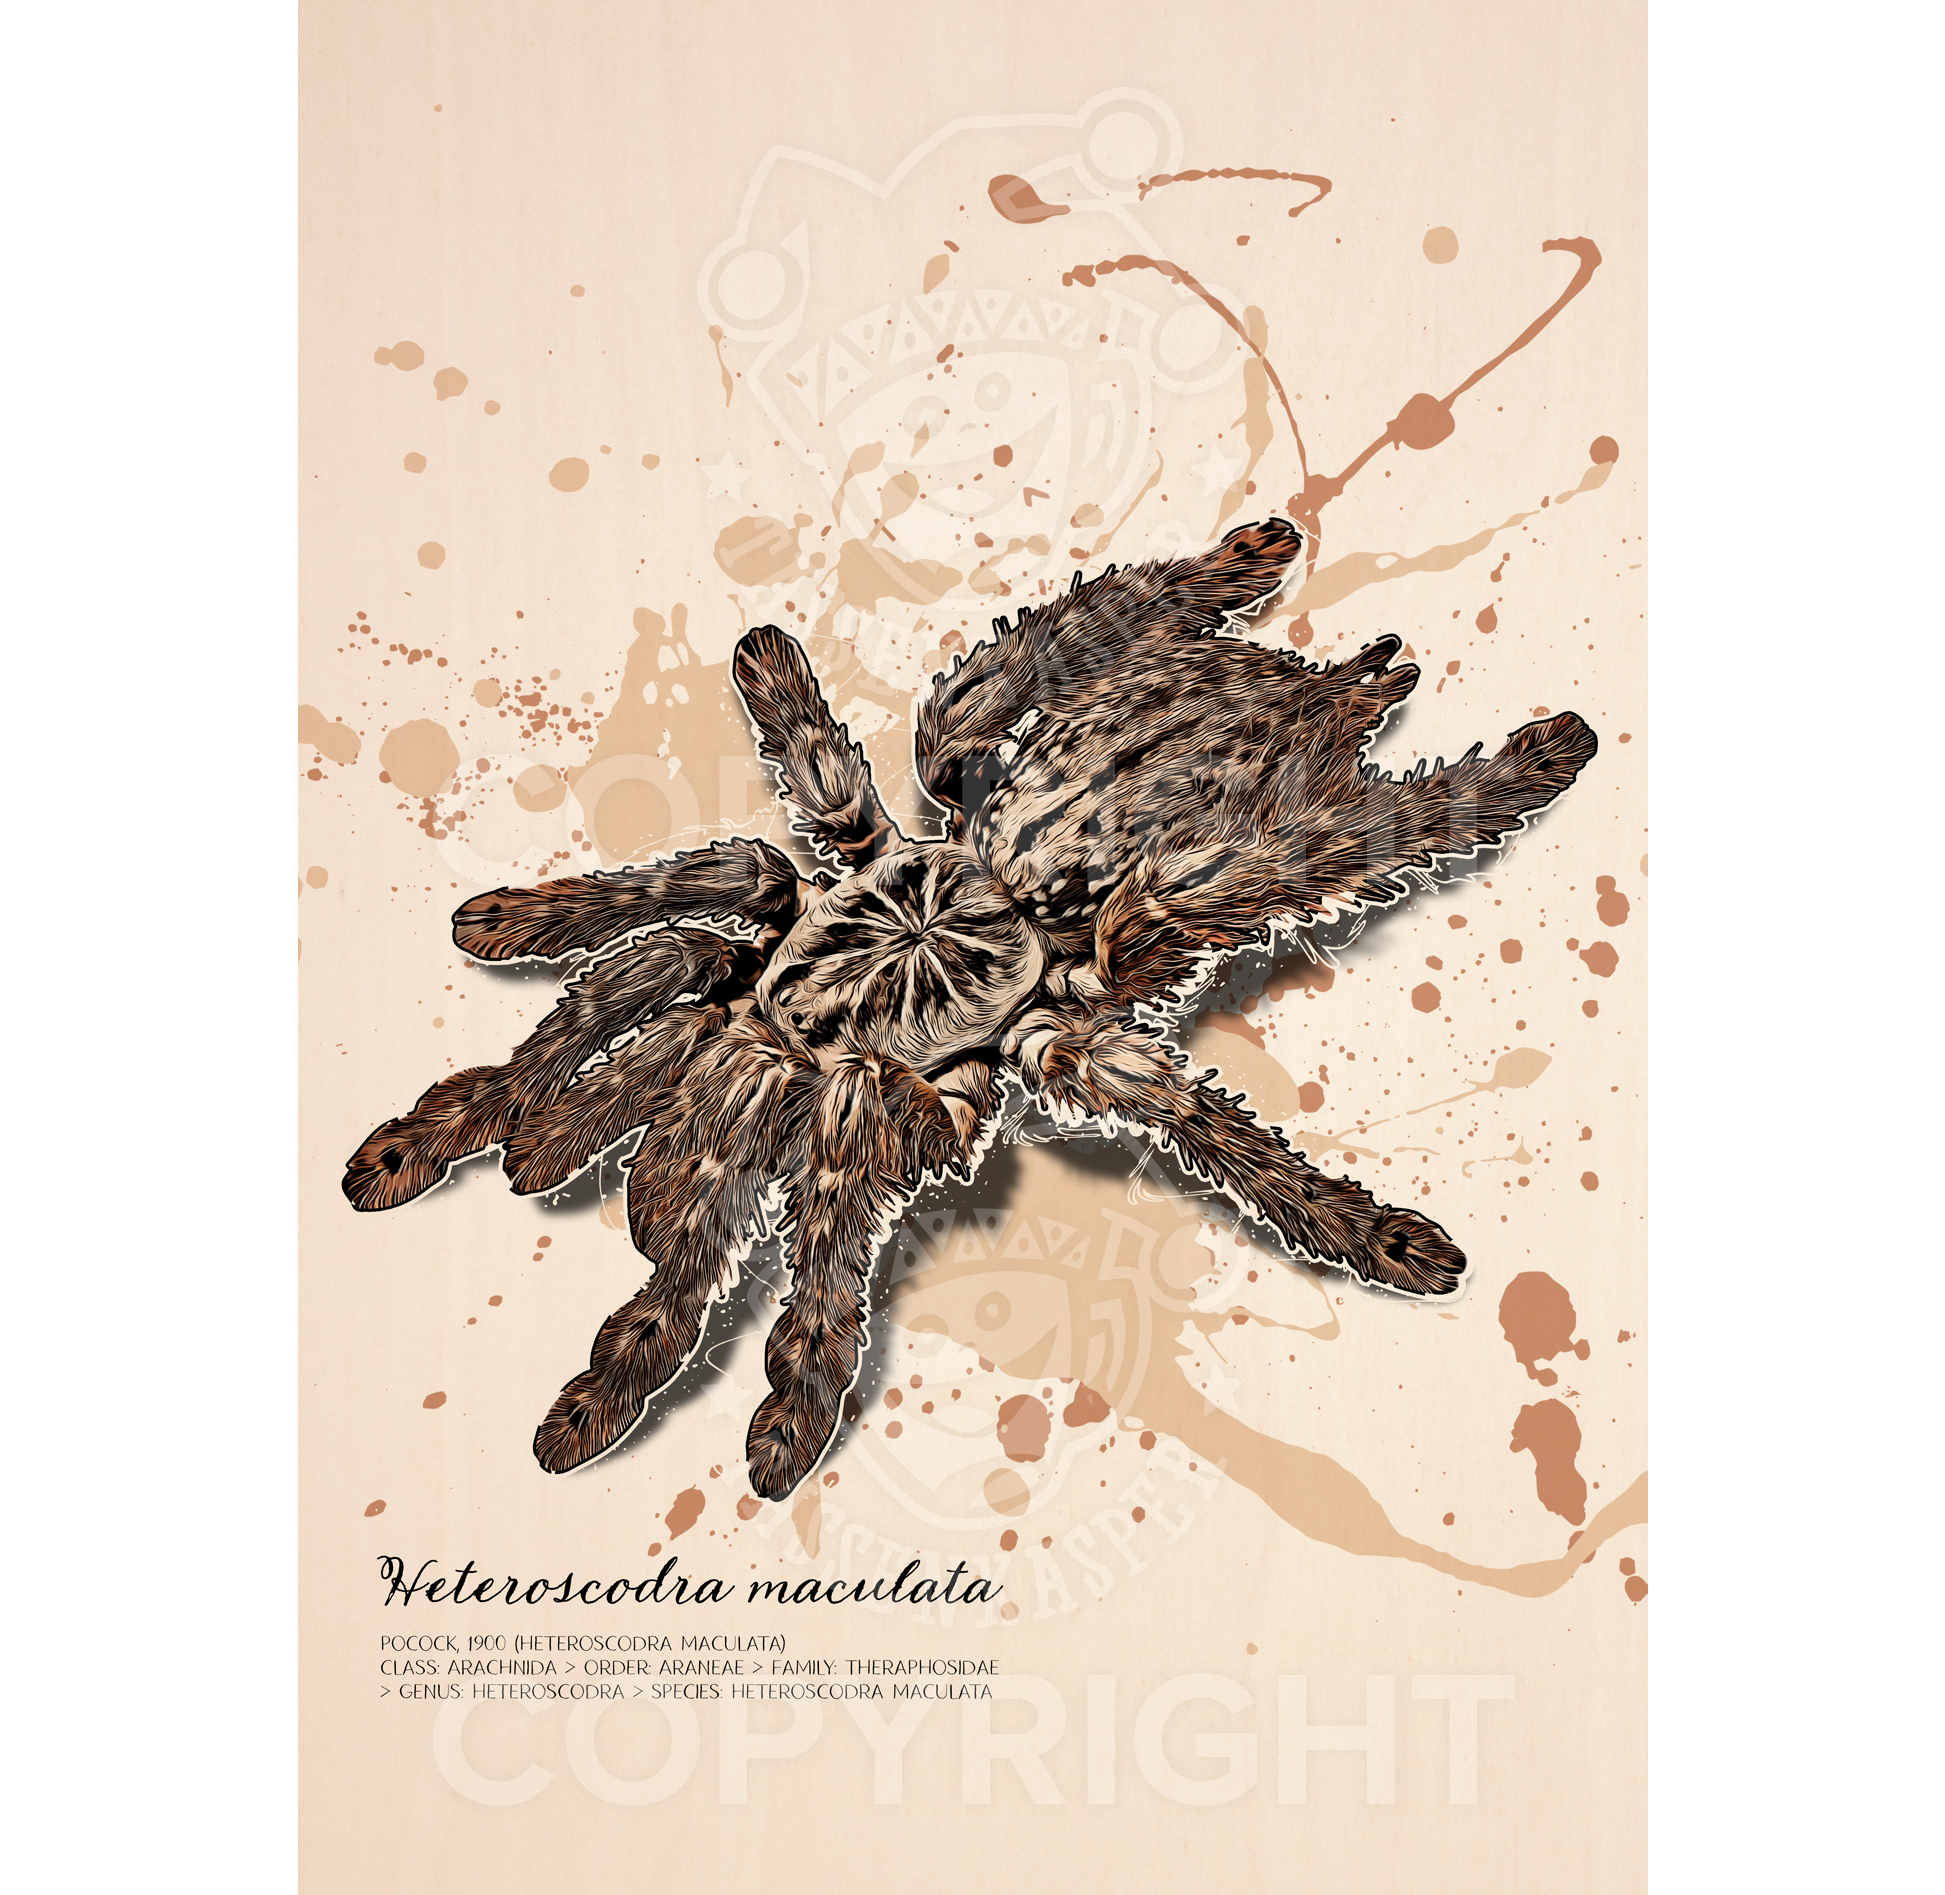 Wandbild Heteroscodra maculata (auf Holz gedruckt)